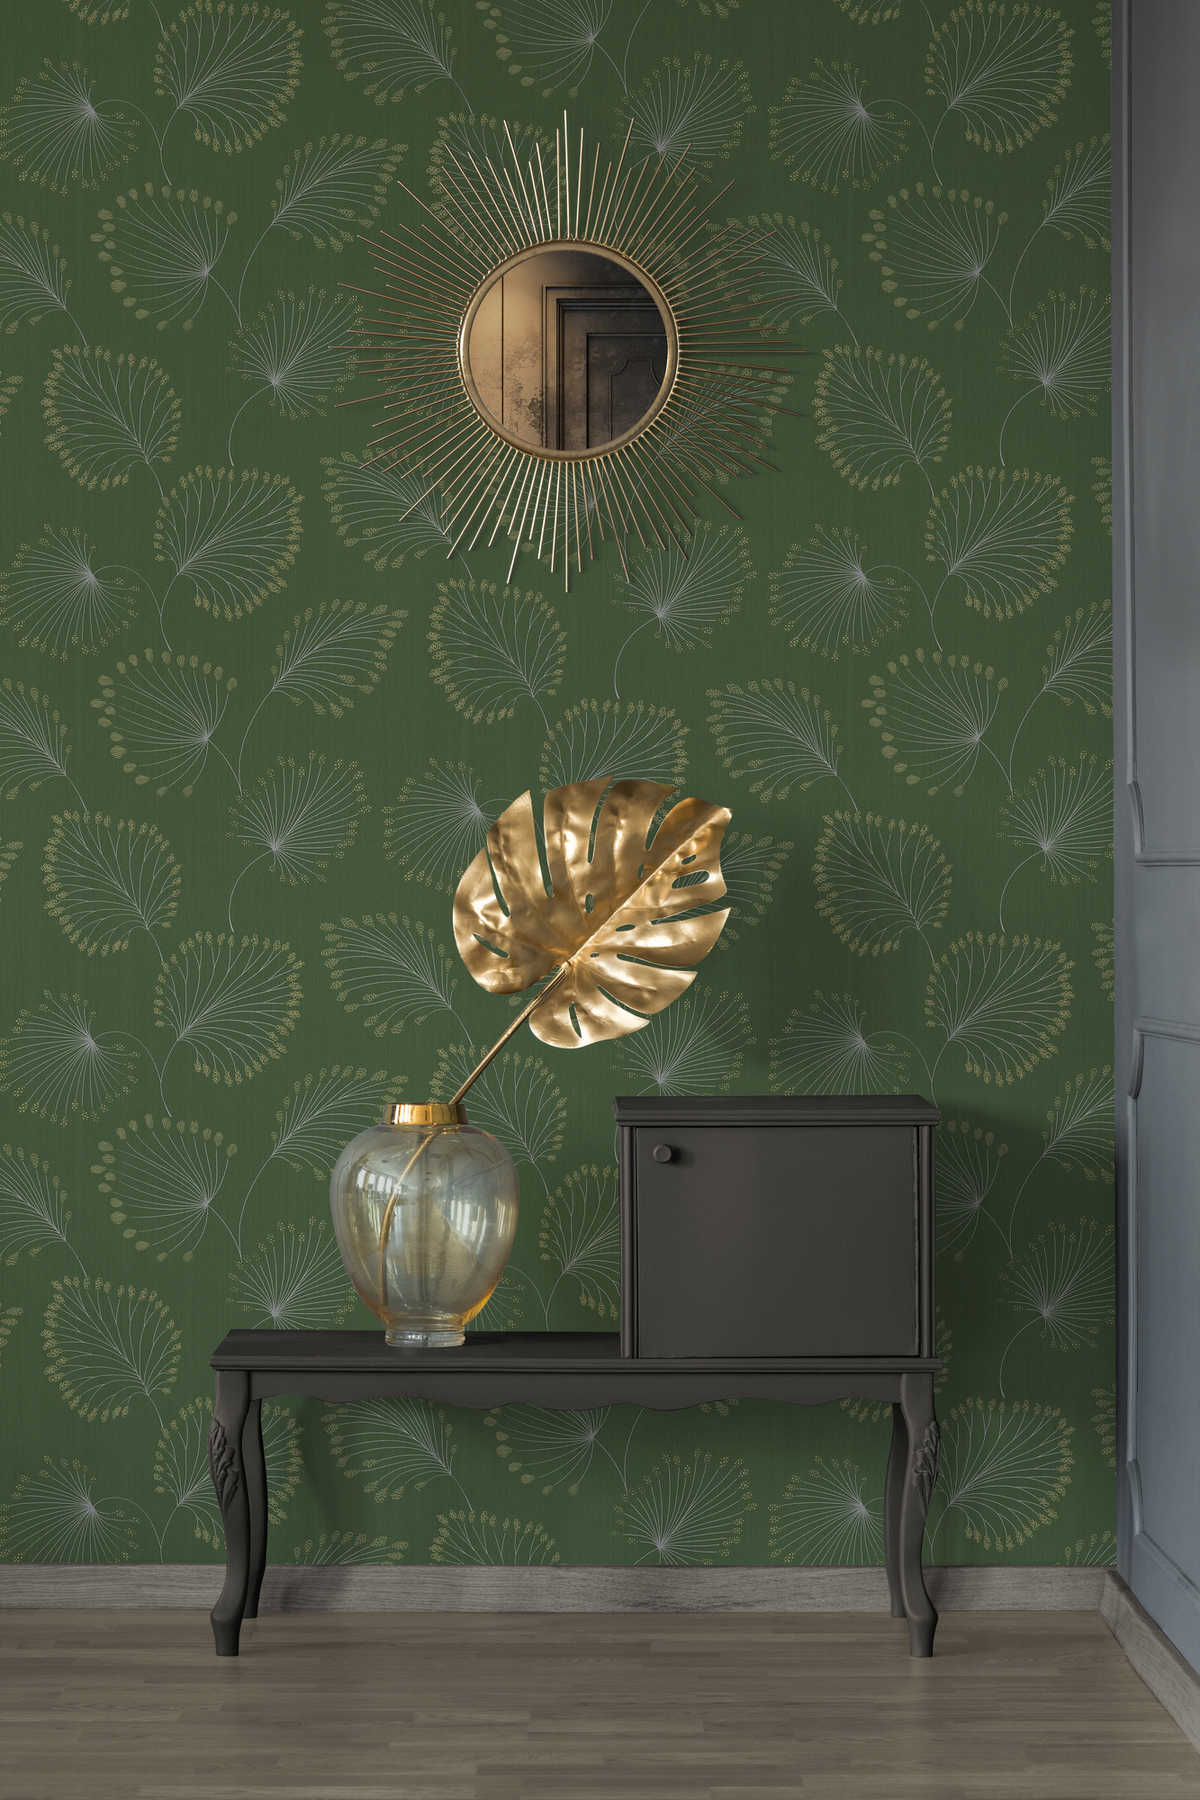             Retro wallpaper with 50s design & gold effect - green, metallic
        